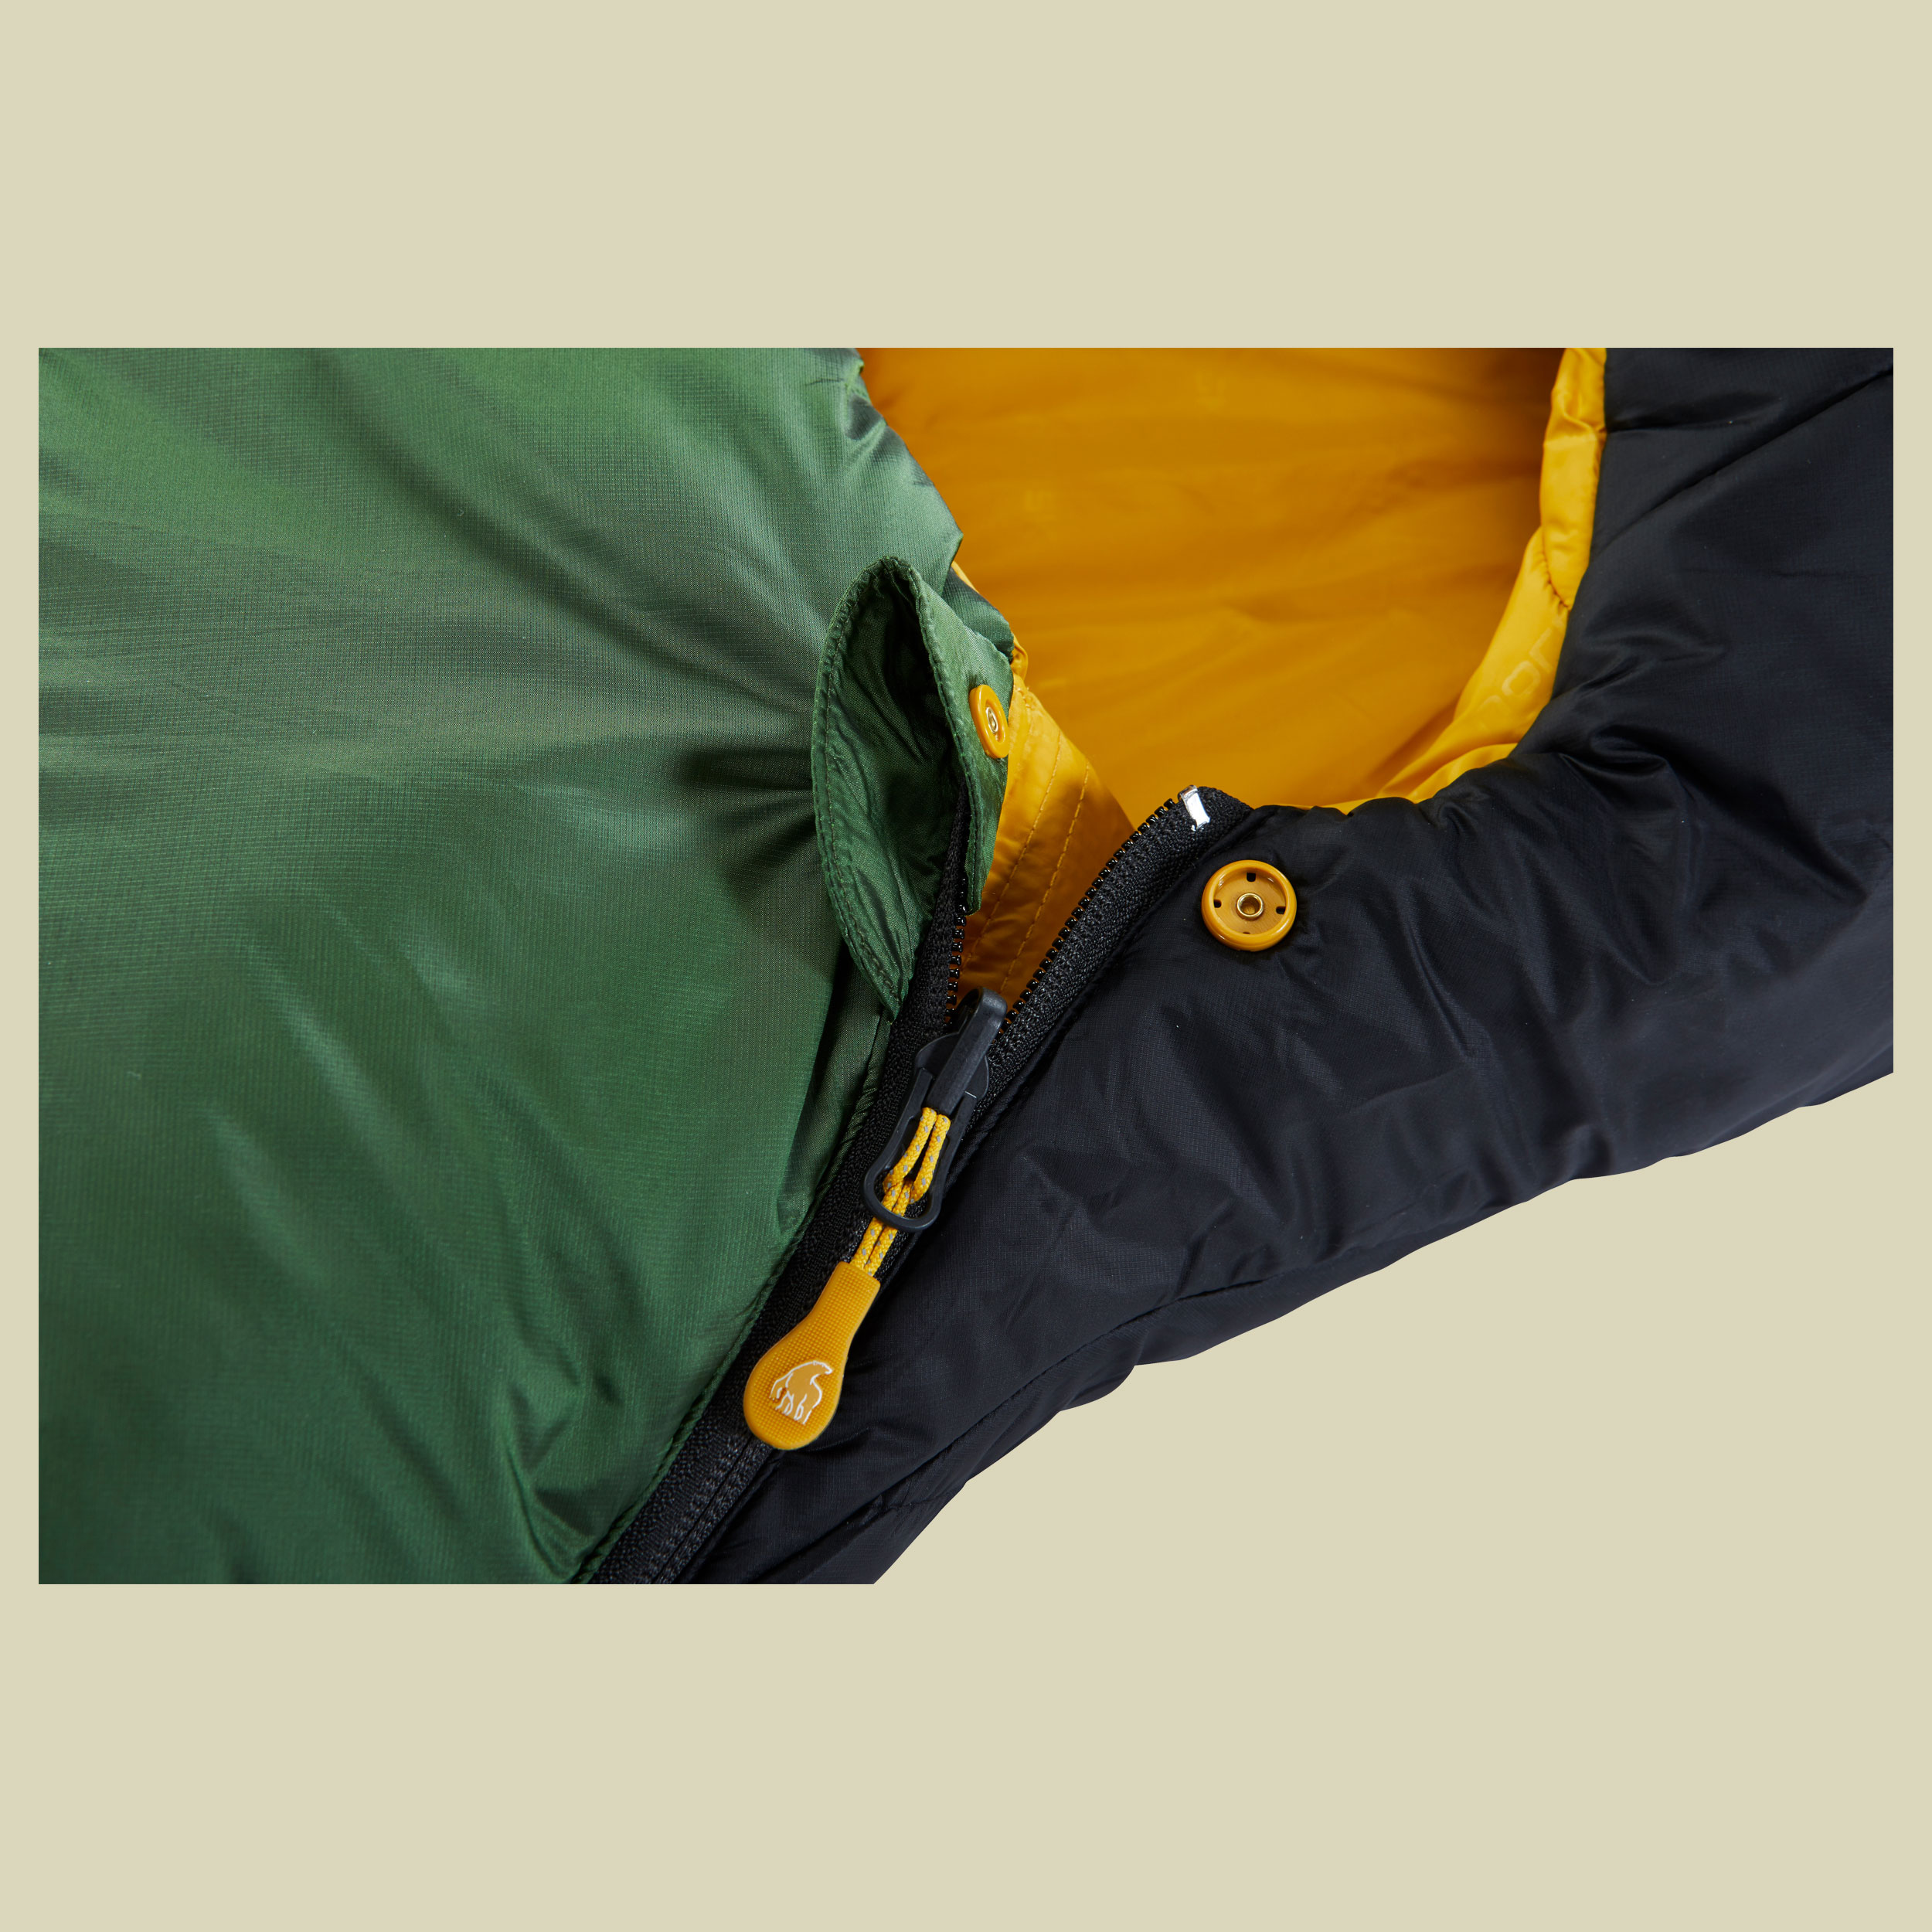 Gormsson +4 Curve bis Körpergröße 205 cm (XL) Farbe artichoke green/mustard yellow/black, Reißverschluss links